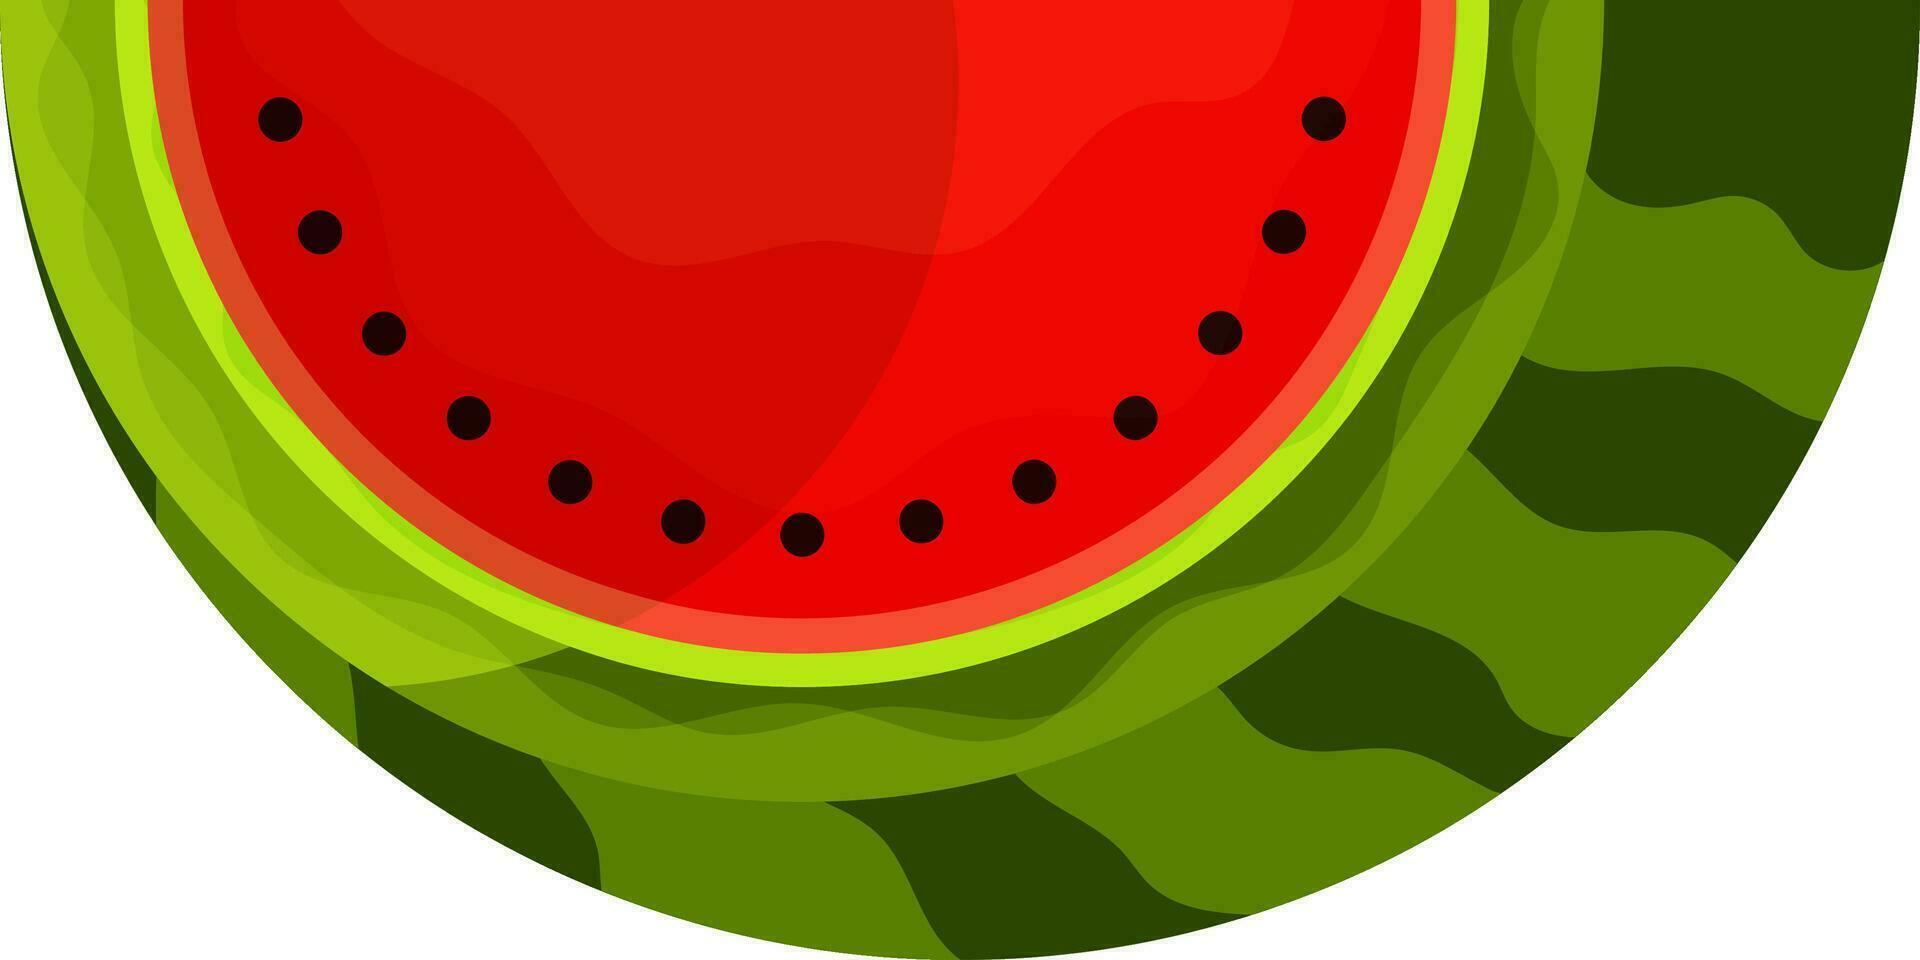 Fresco Fruta ilustración vector